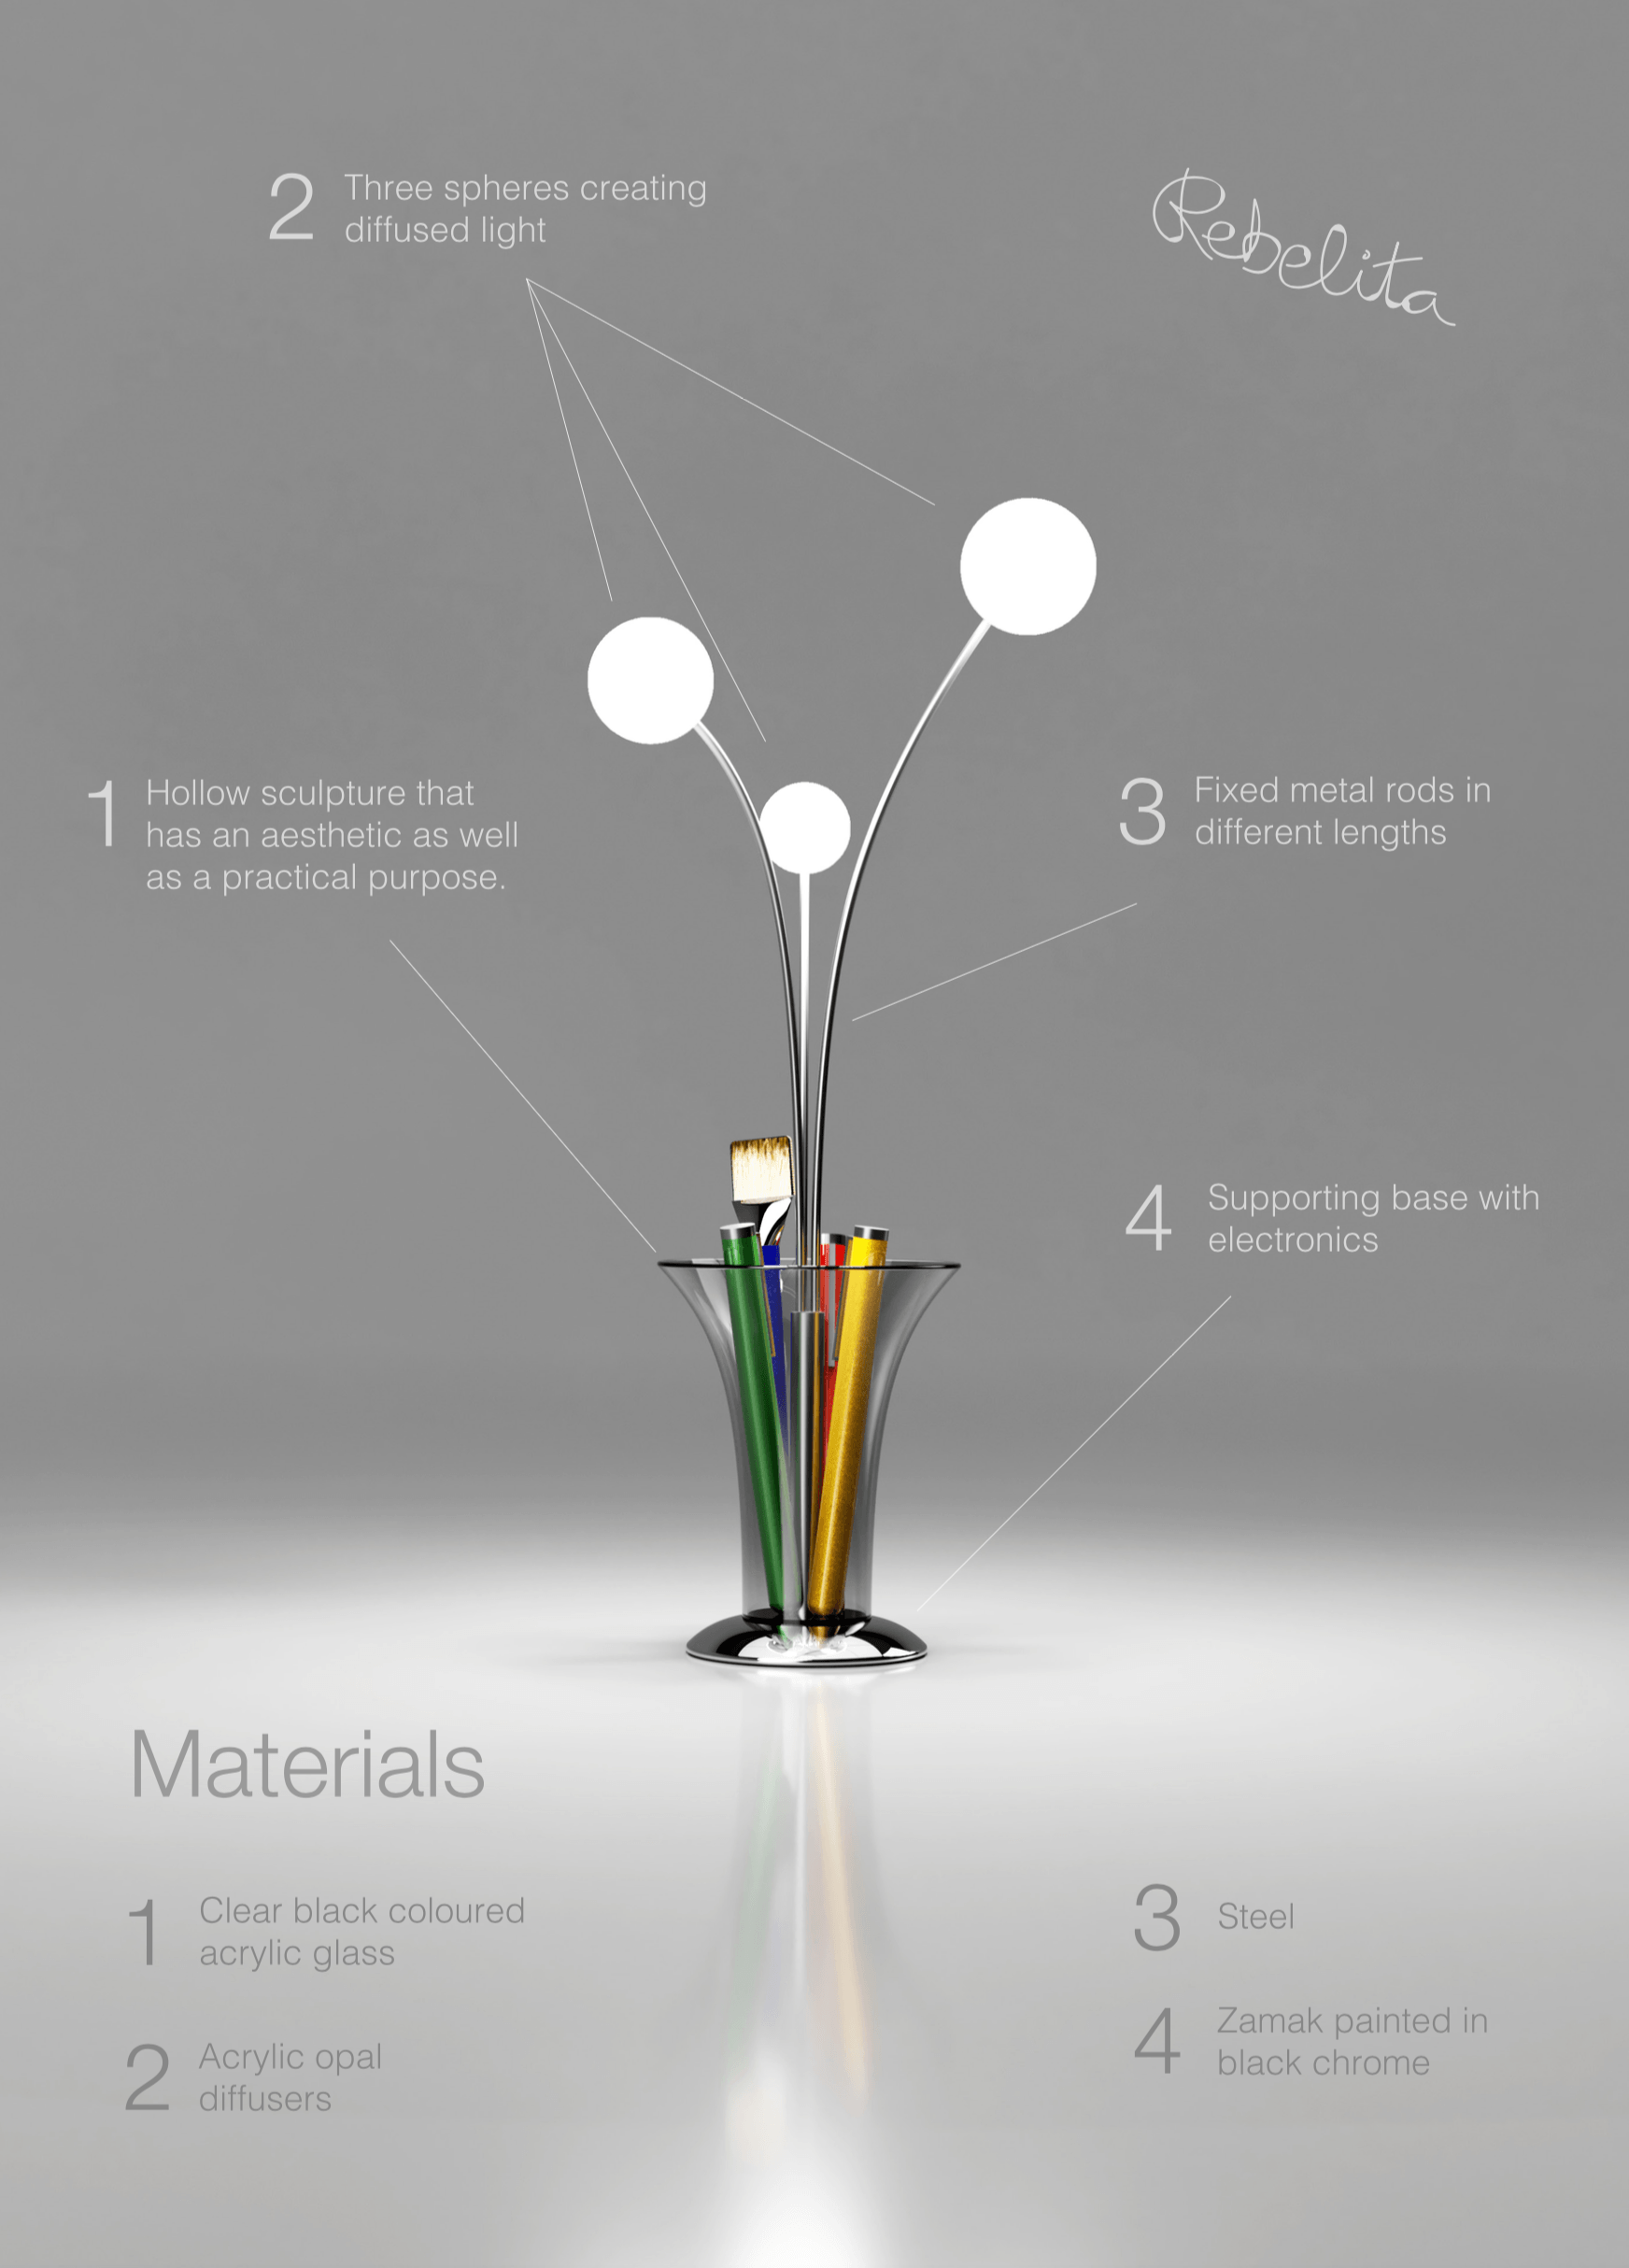 Miroslavo’s Industrial Design: Rebelita (stand lamp)